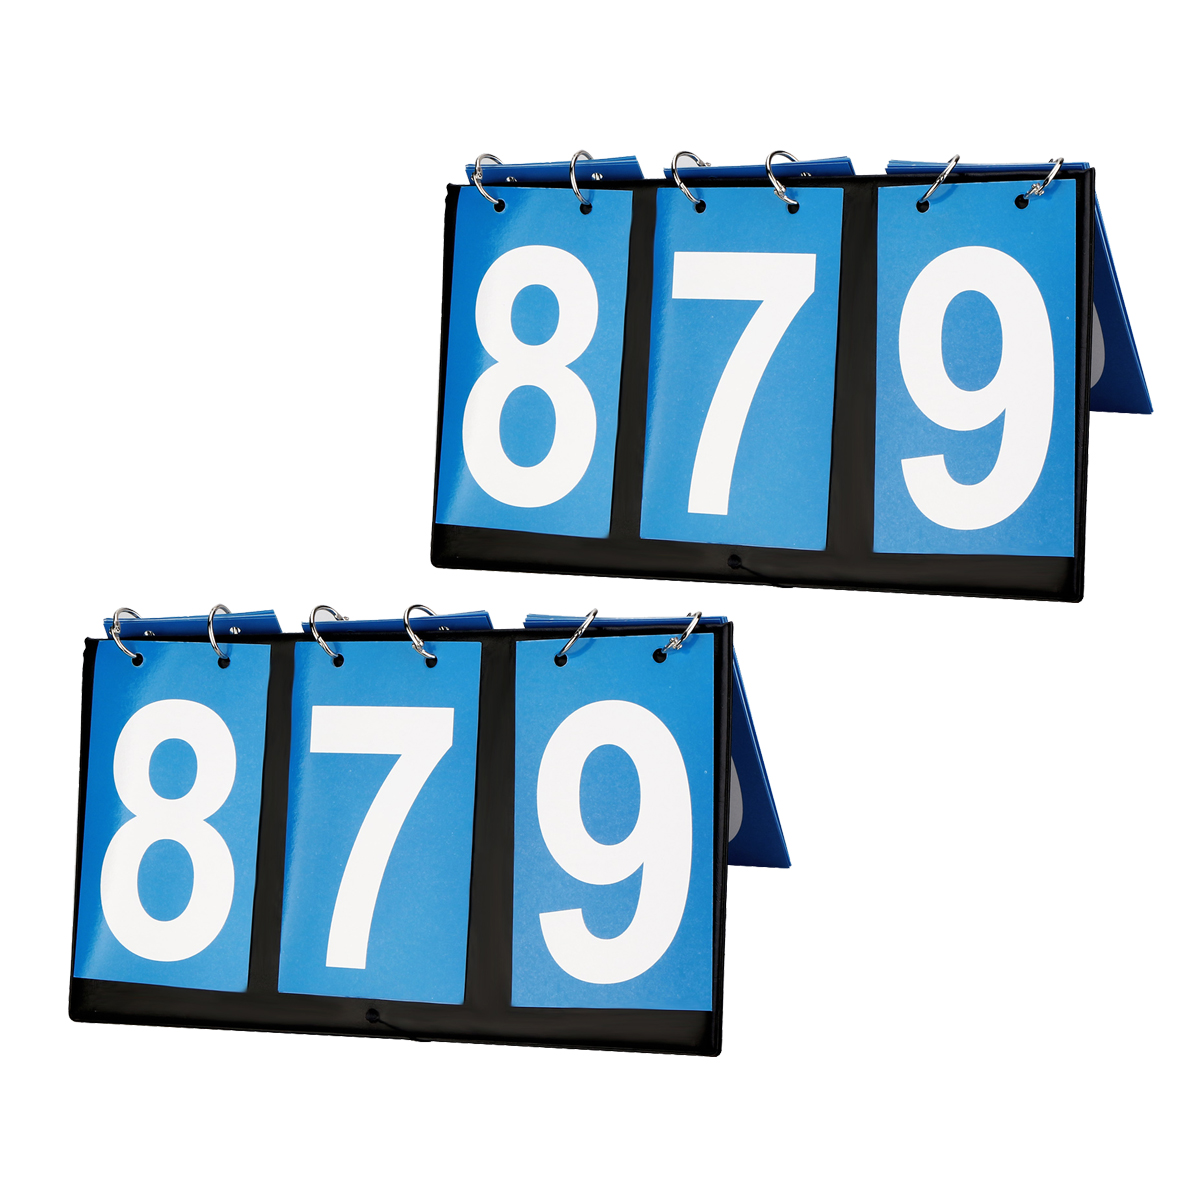 Retekess  tm101 3 cifret resultattavle til bordtennis basketball badminton fodbold volleyball scorebord